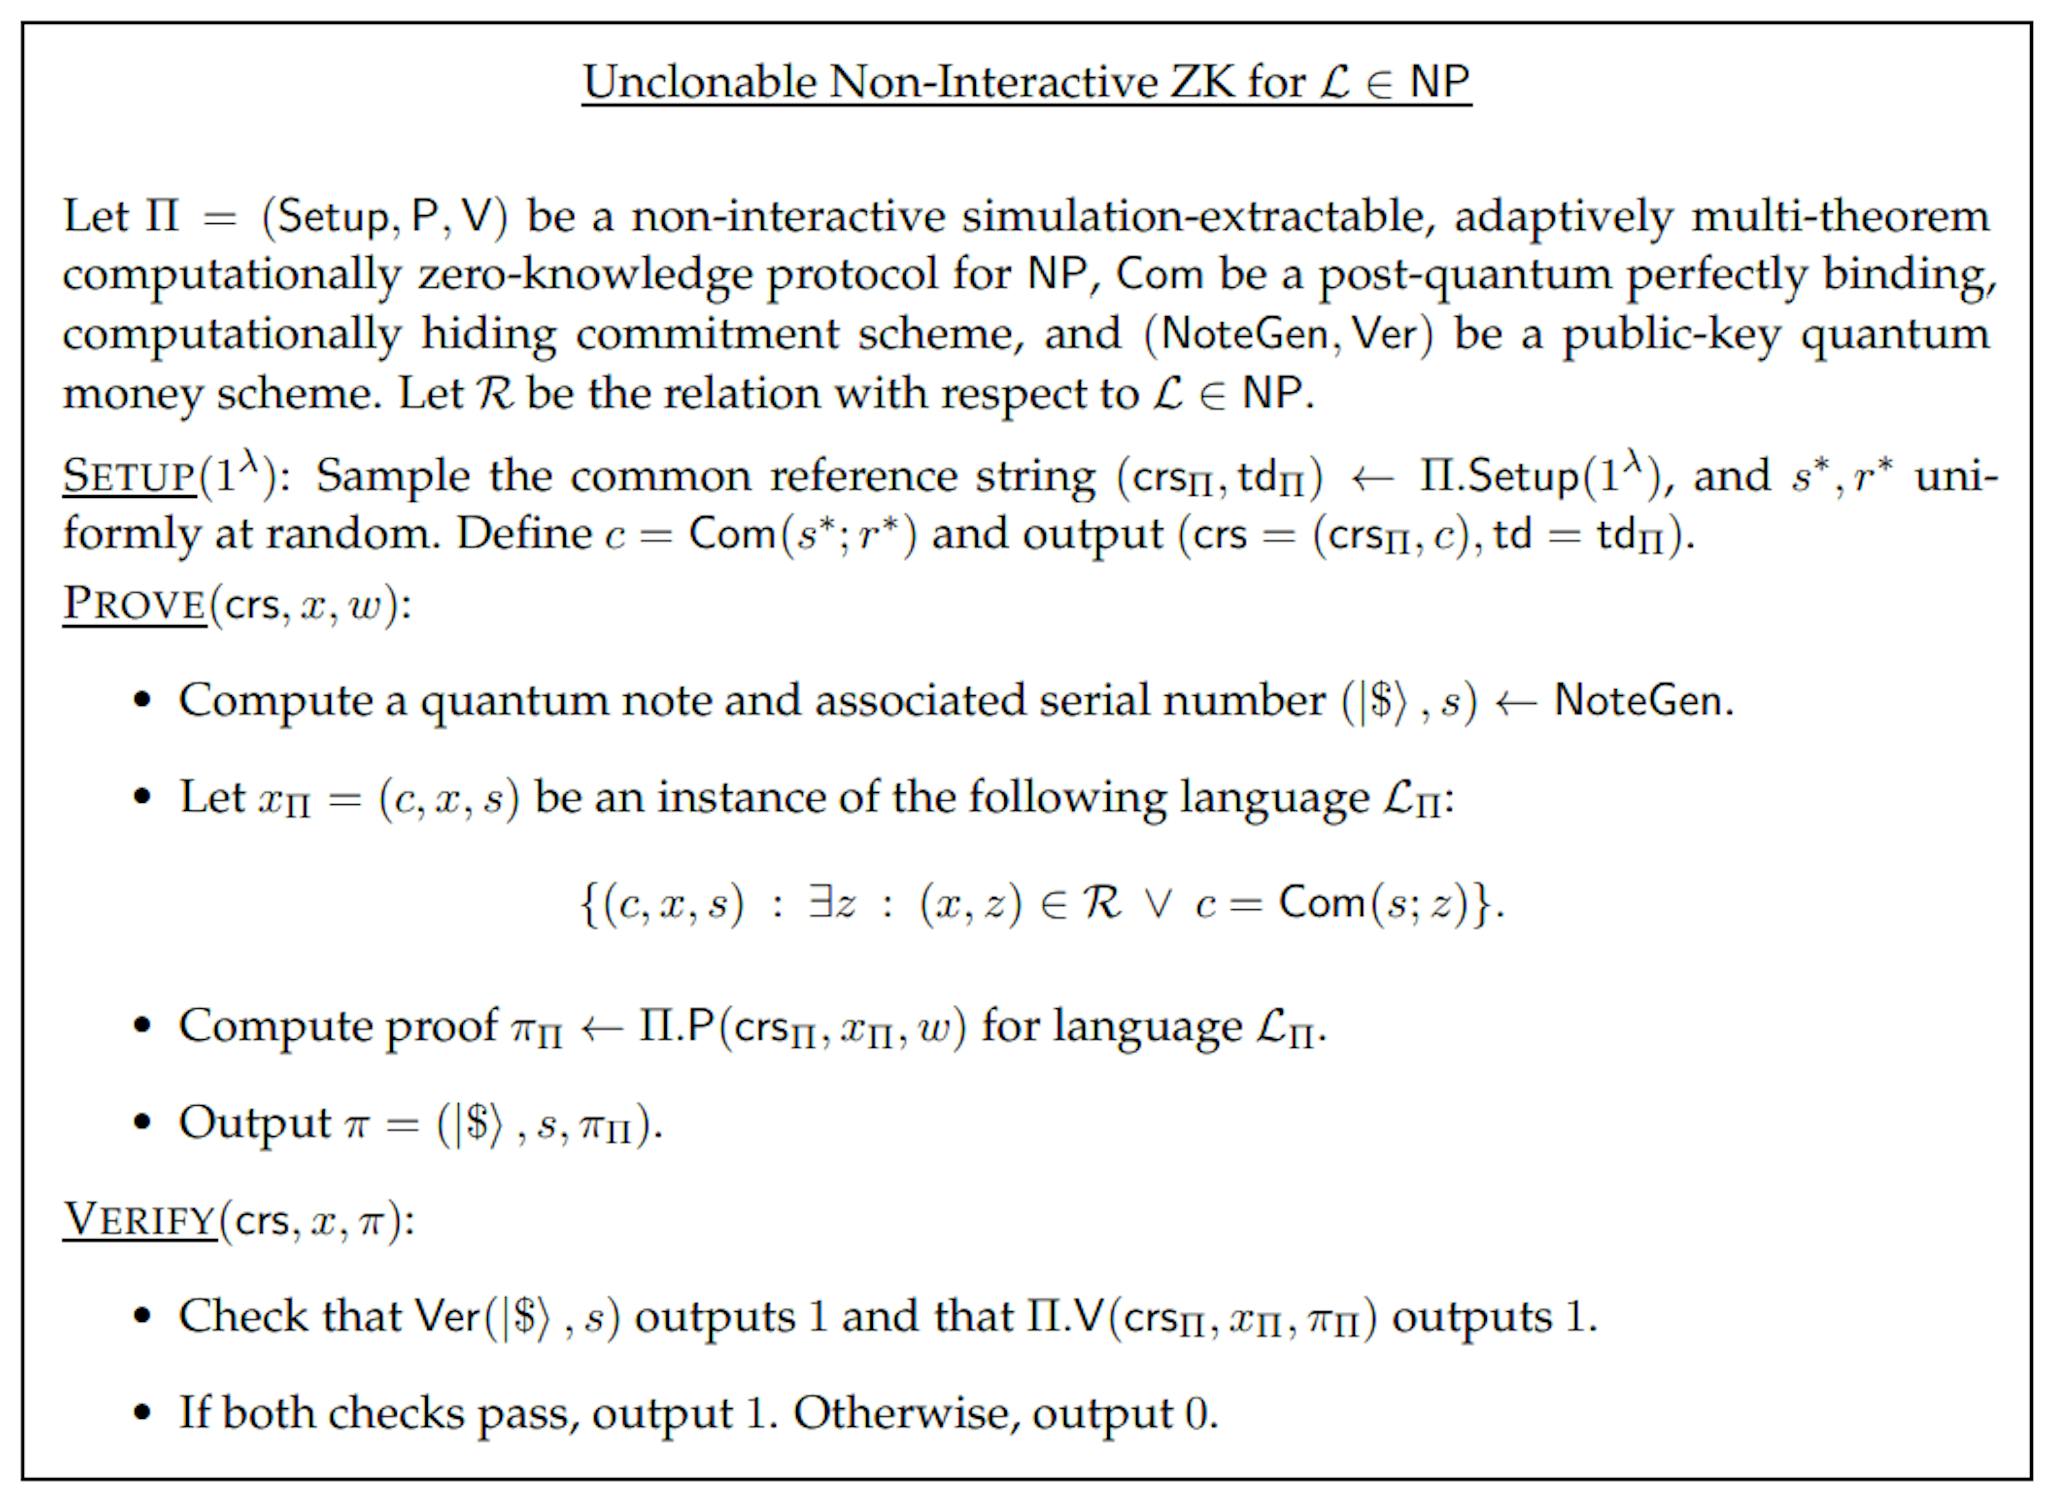 Figure 3: Unclonable Non-Interactive Quantum Protocol for L ∈ NP